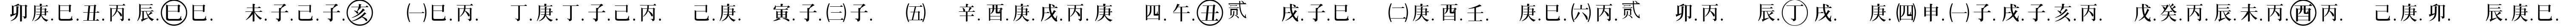 Пример написания шрифтом Chinese Generic1 текста на испанском